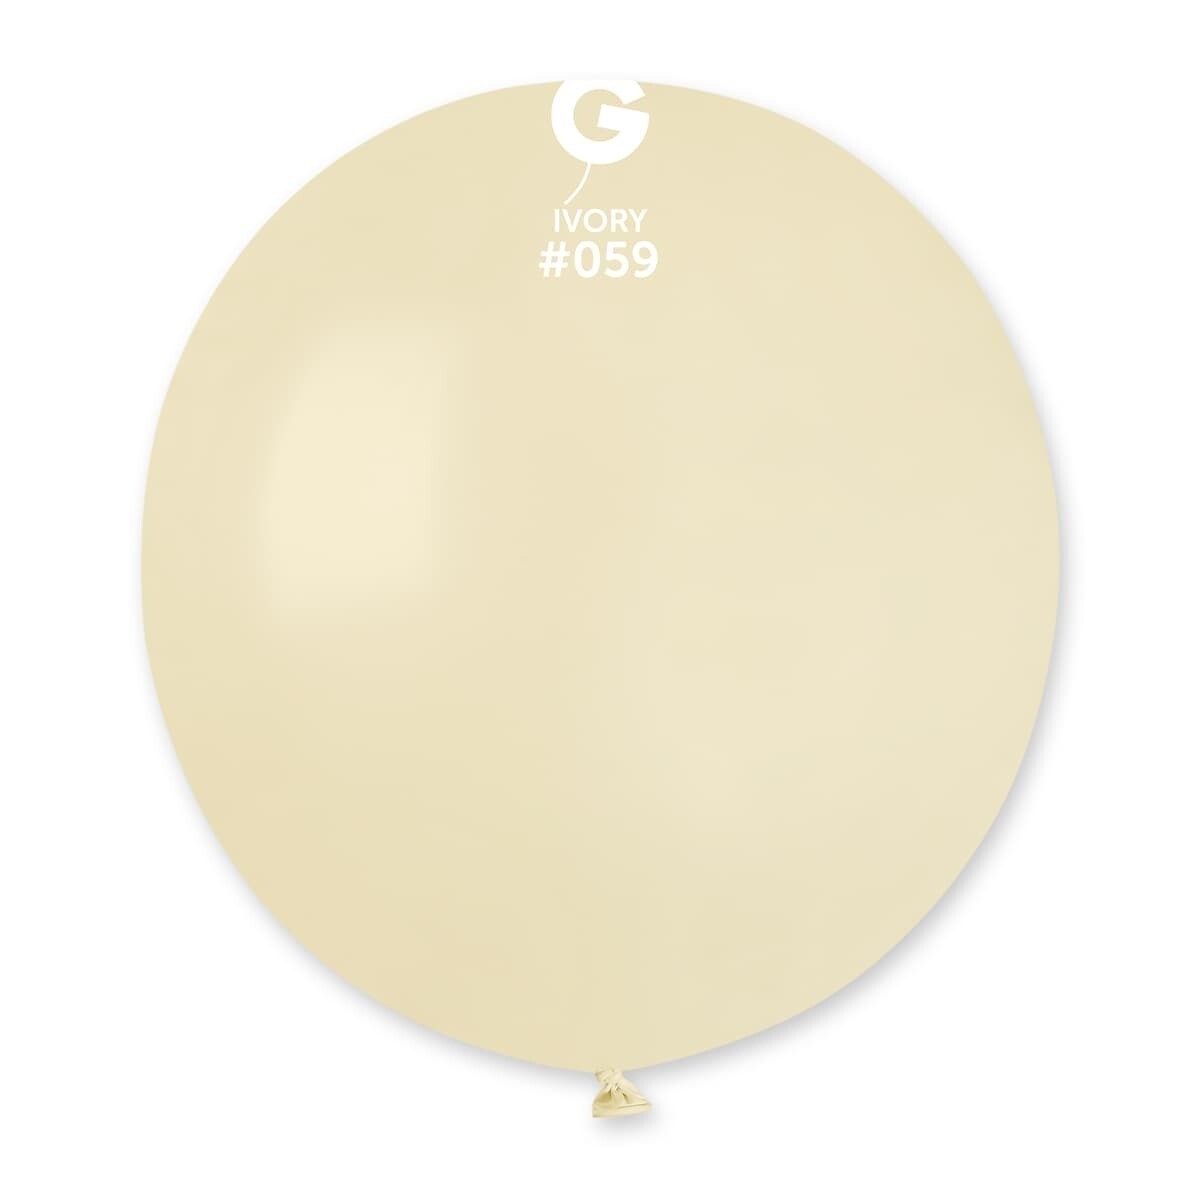 G150: #059 Ivory 155952 Standard Color 19 in